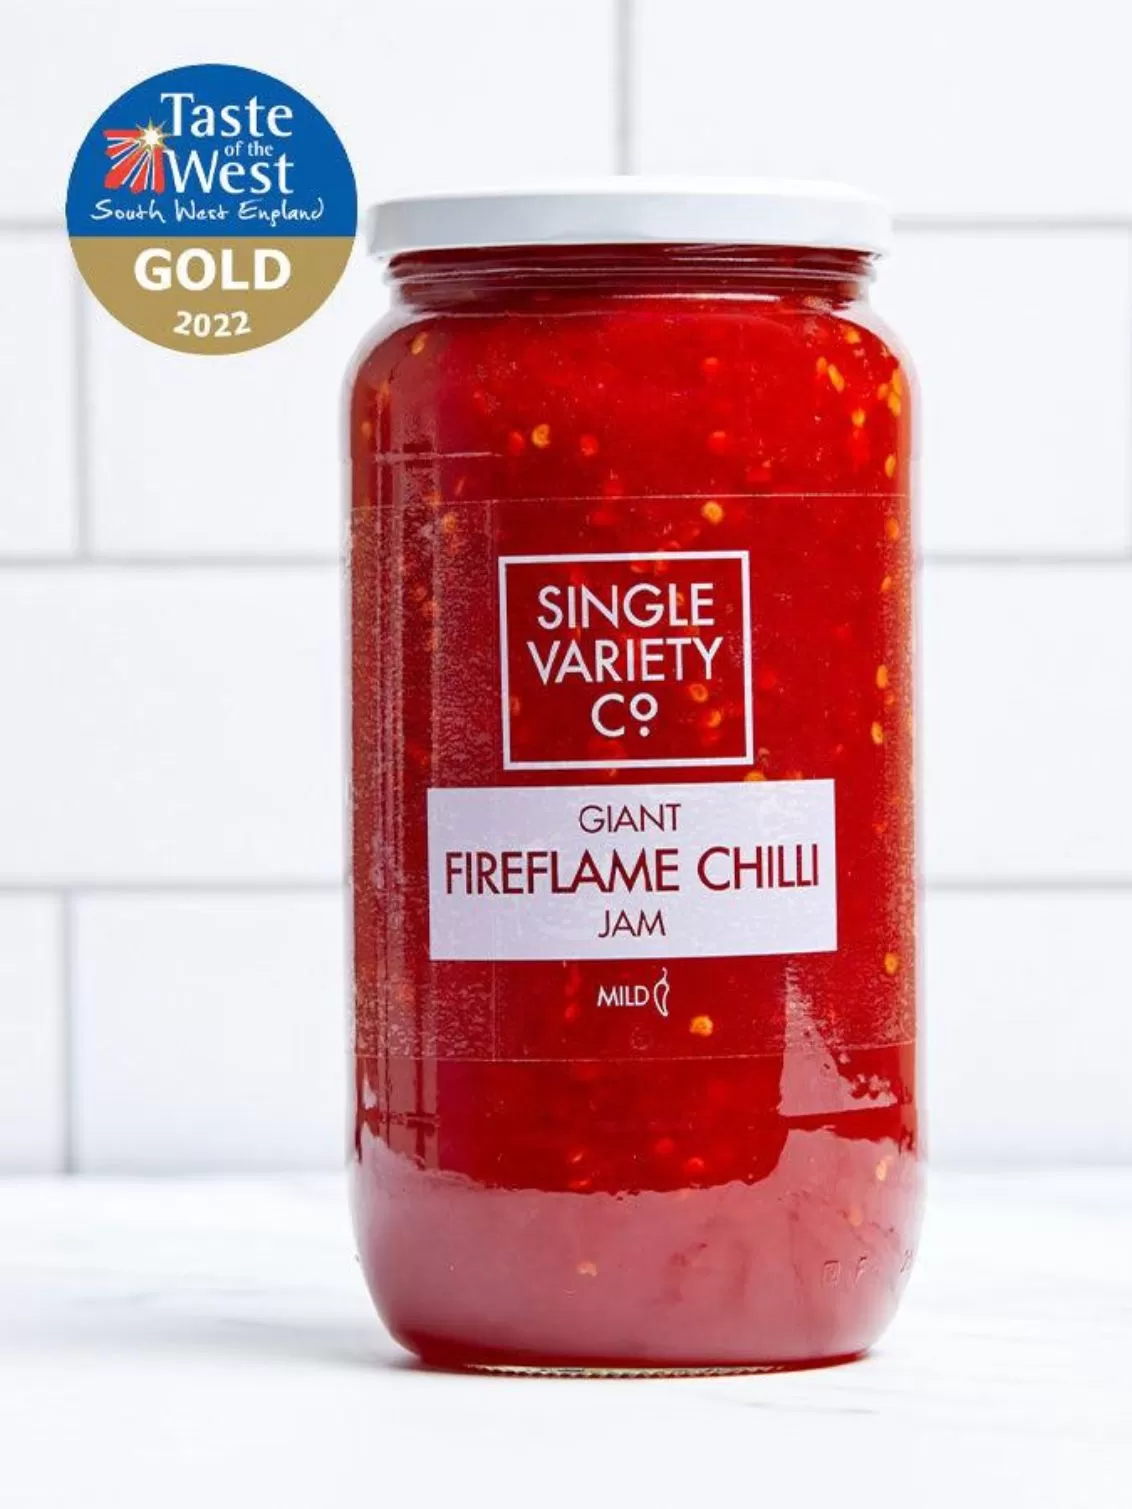 Giant Fireflame Chilli Jam